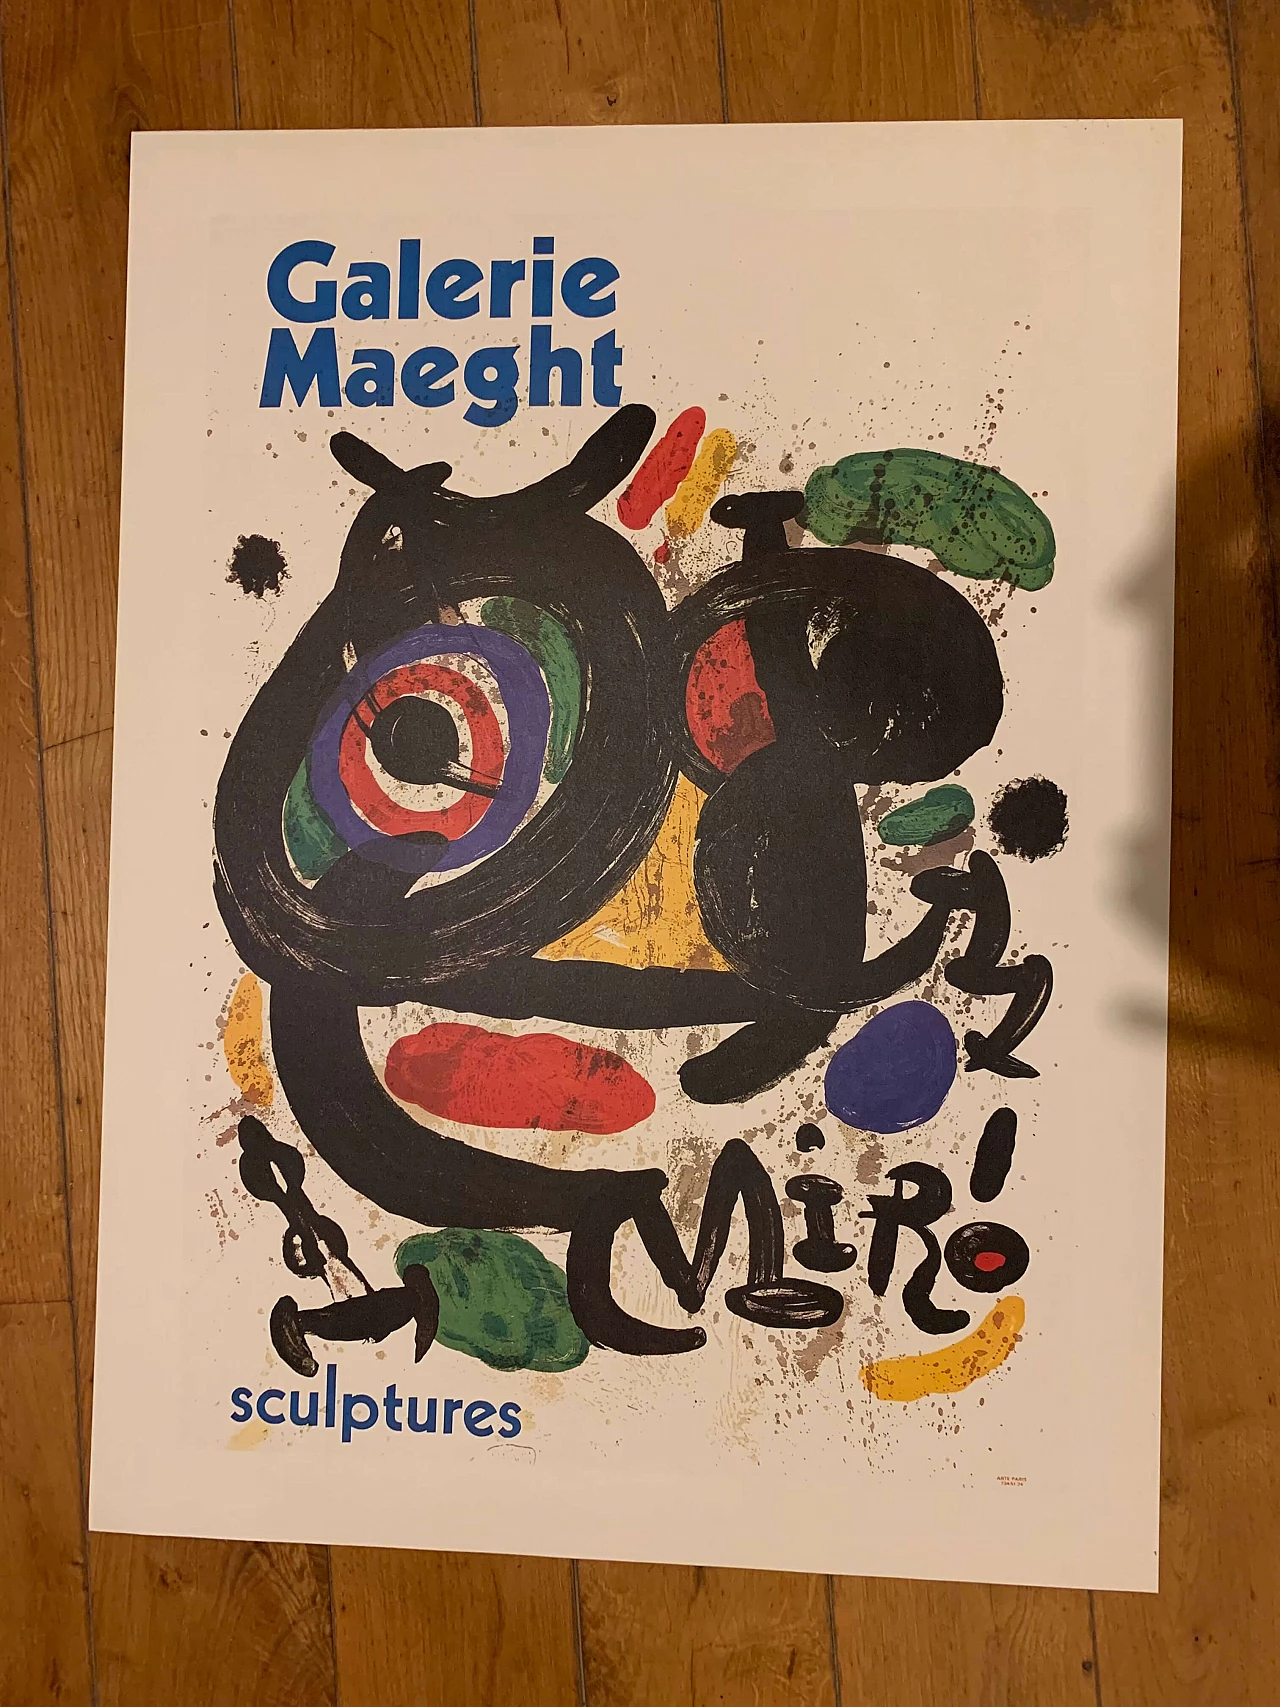 Manifesto per mostra di Joan Miró alla Galerie Maeght, anni '70 1